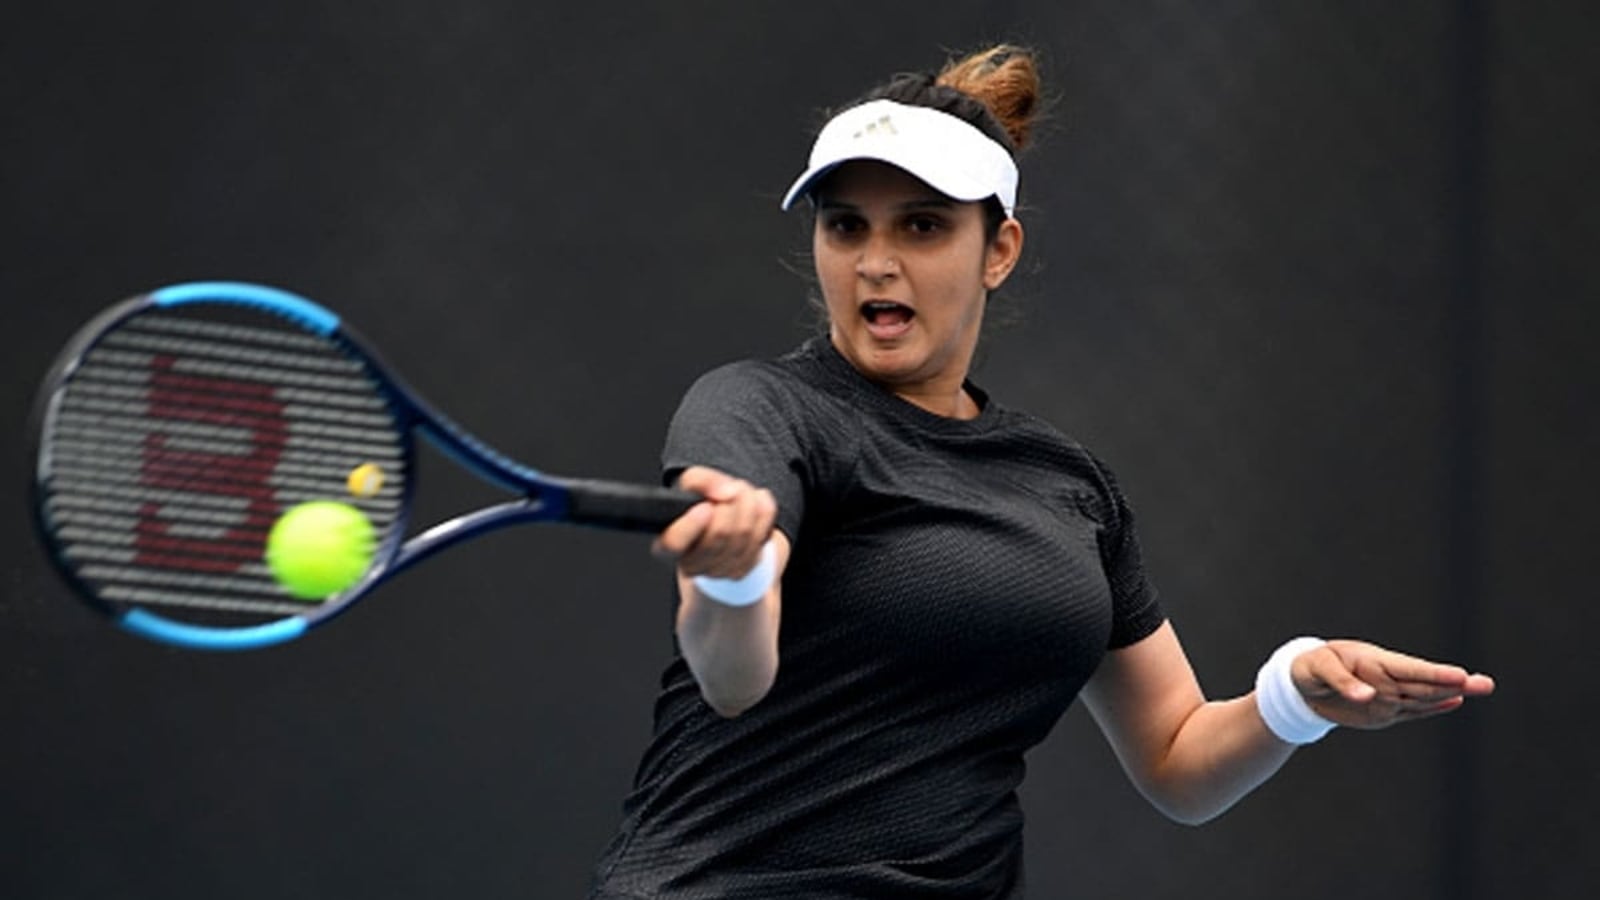 Sania Mirza Ka Sex - Sania Mirza shares heartfelt post ahead of 'last Australian Open' of her  career | Tennis News - Hindustan Times